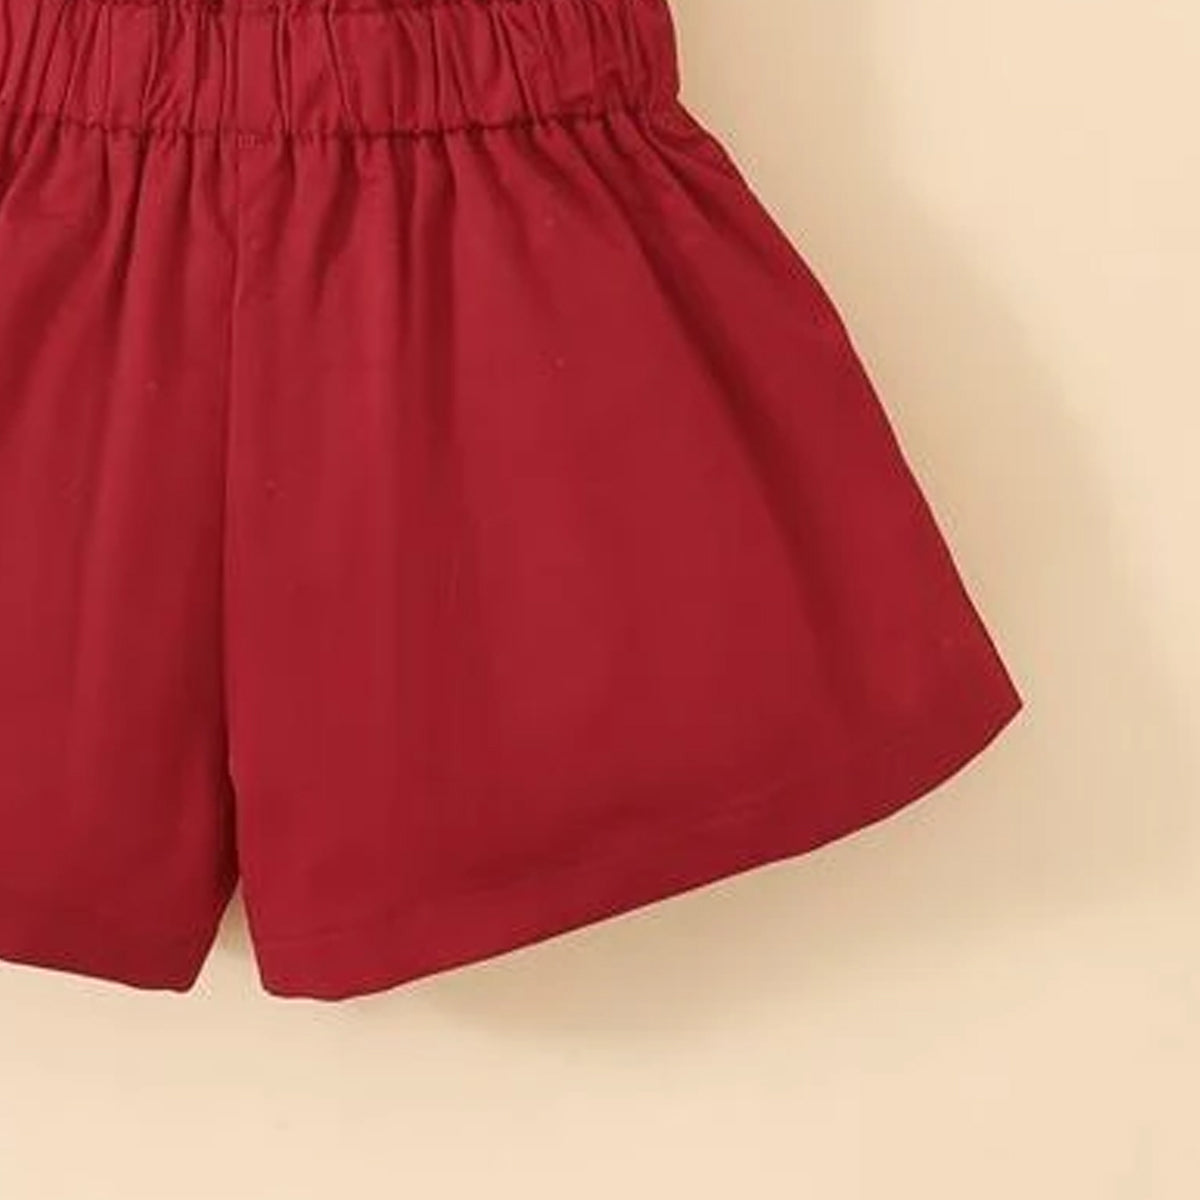 Maroon Stylish Shorts For Baby Girls.